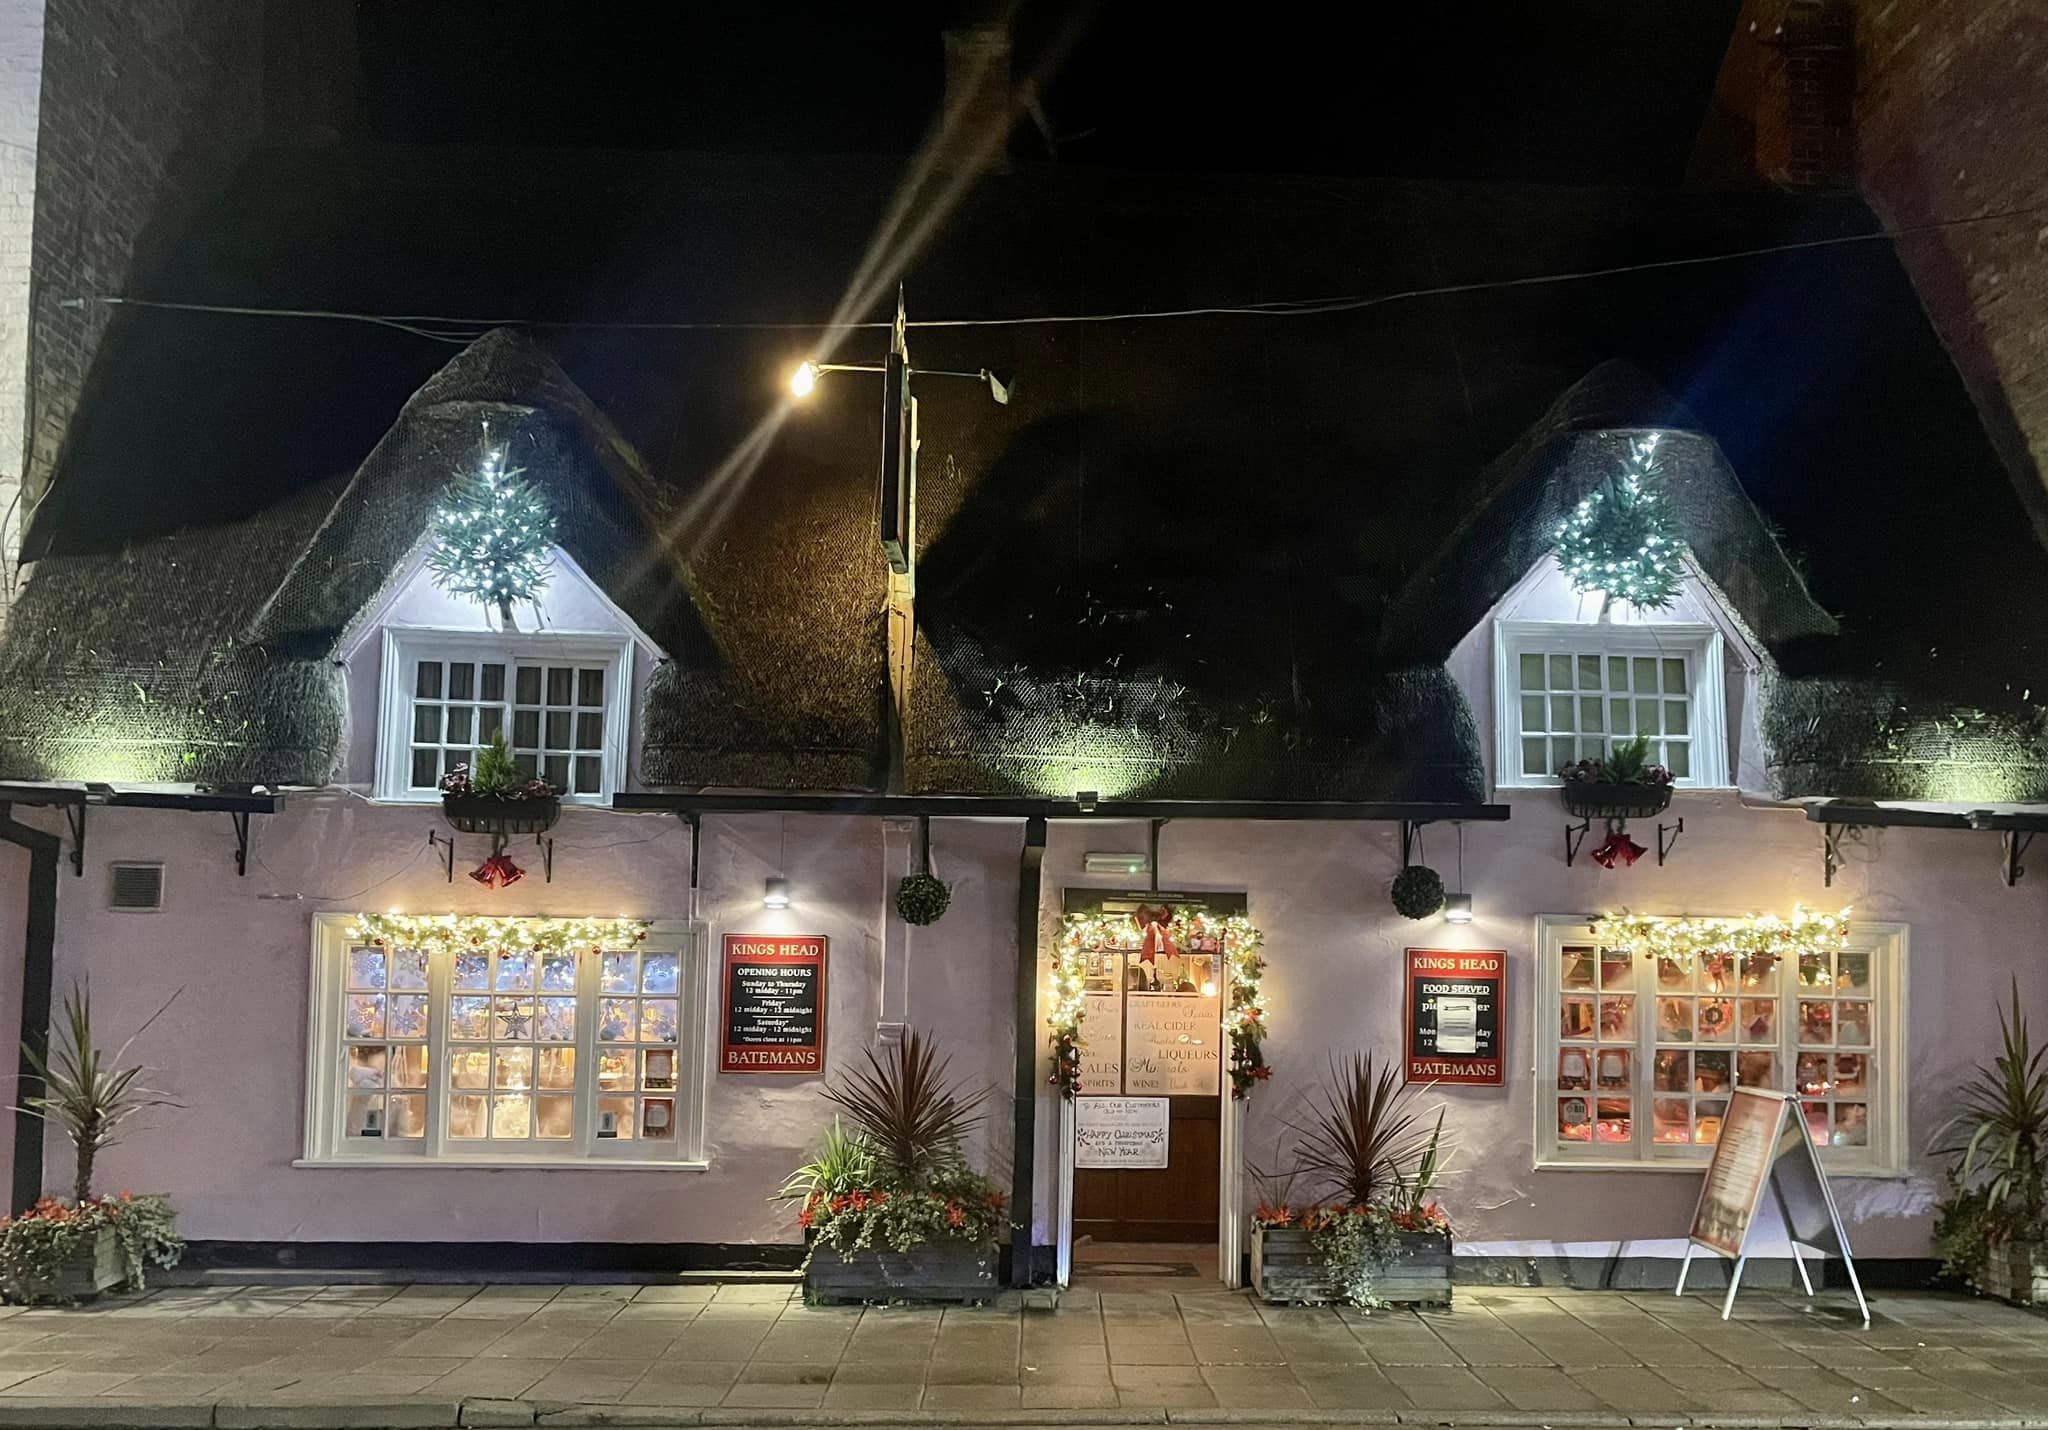 Kings Head Pub Horncastle - Batemans Pub - Christmas